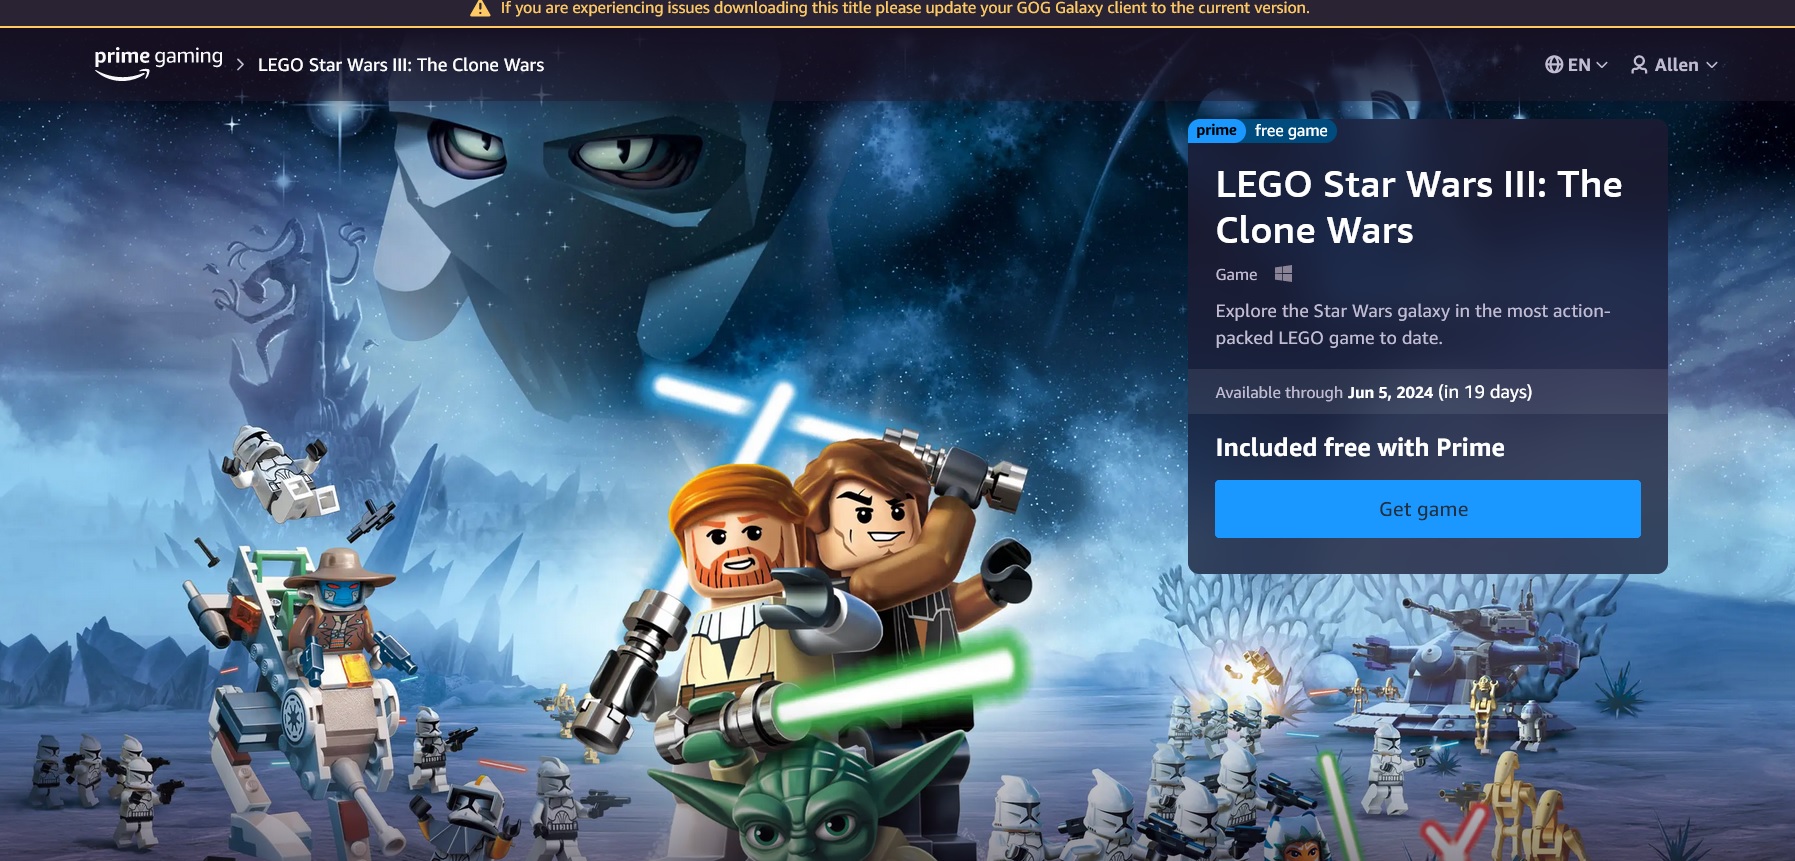 LEGO Star Wars III The Clone Wars Prime Gaming